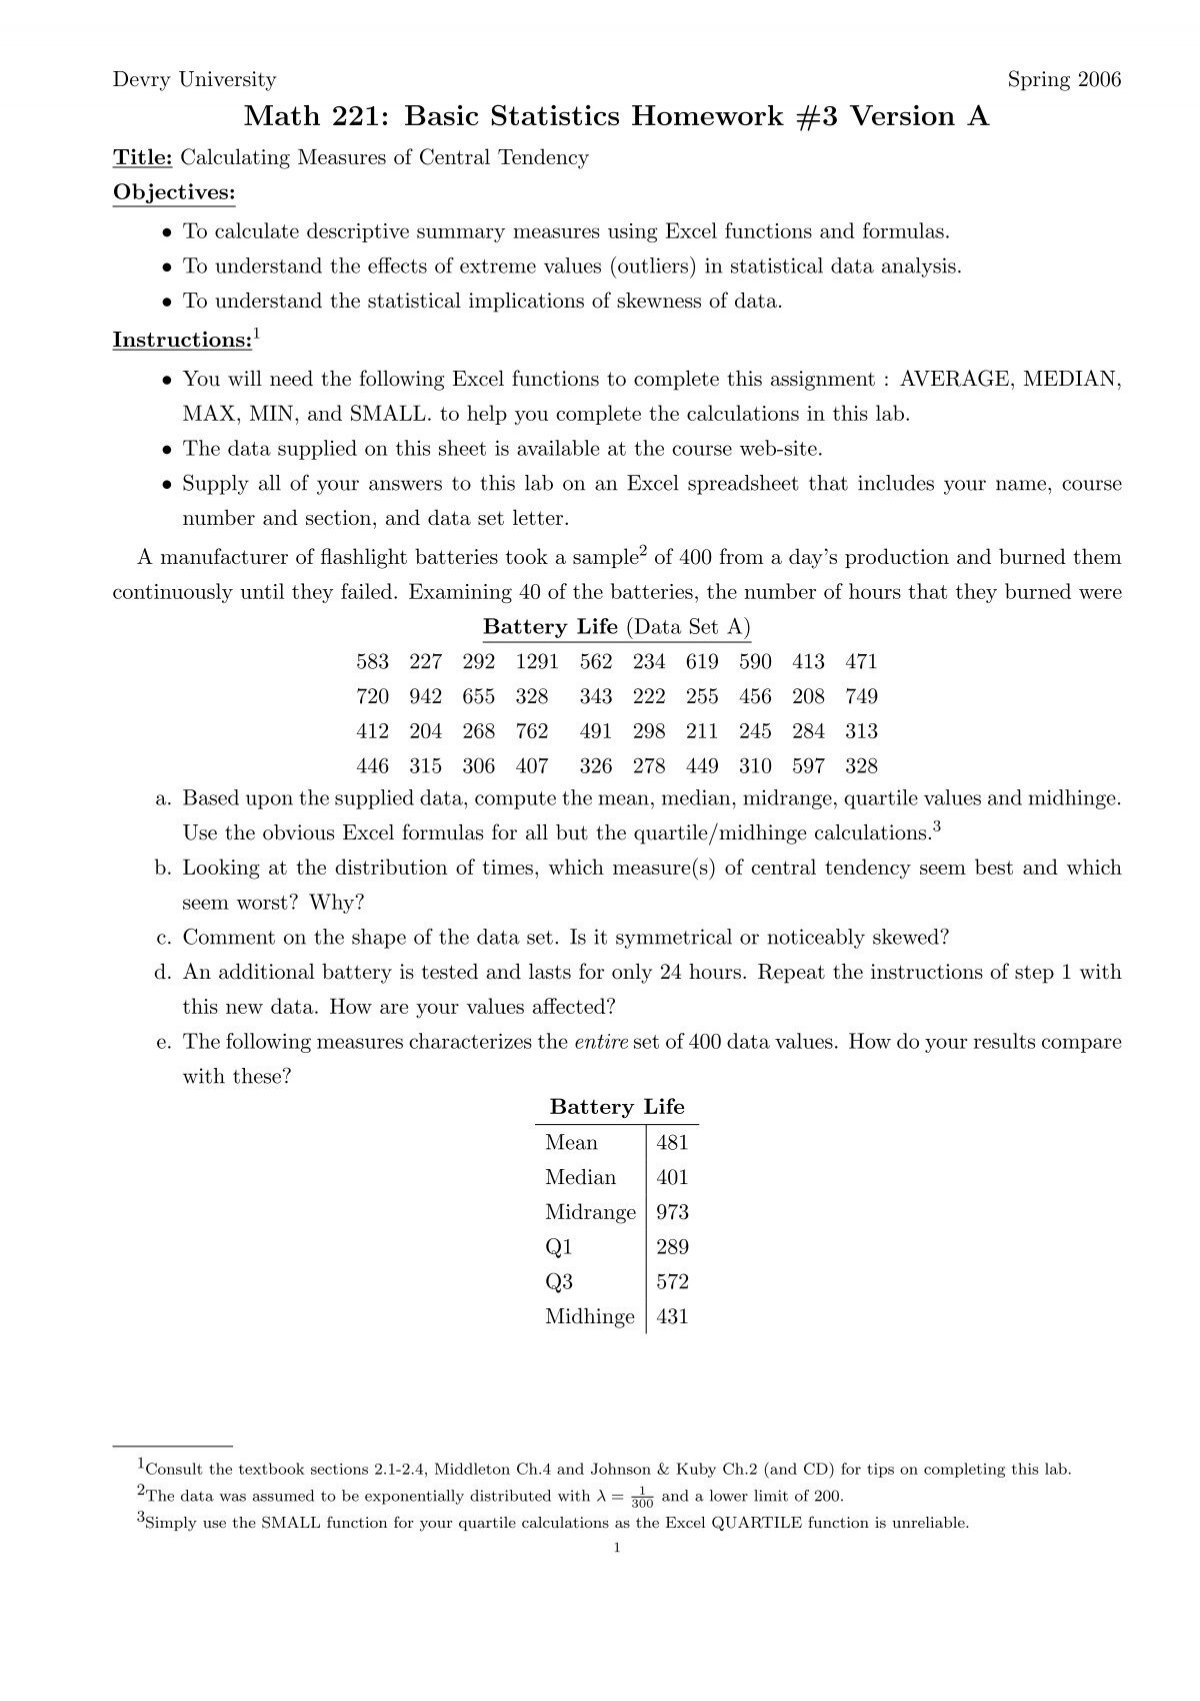 ap statistics 1.3 homework